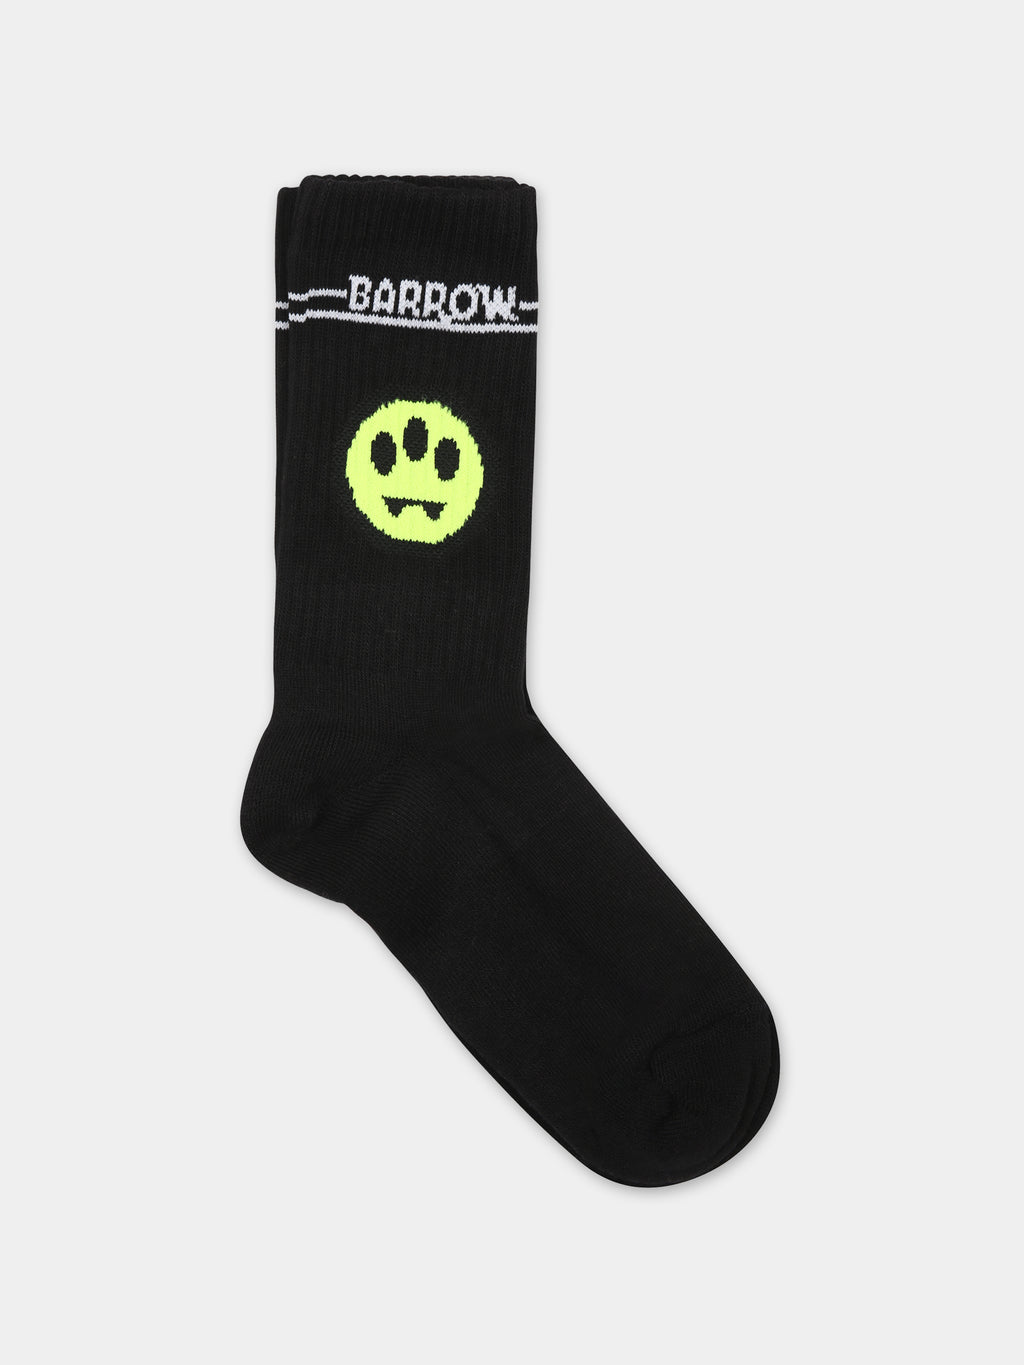 Black socks for kids with smiley